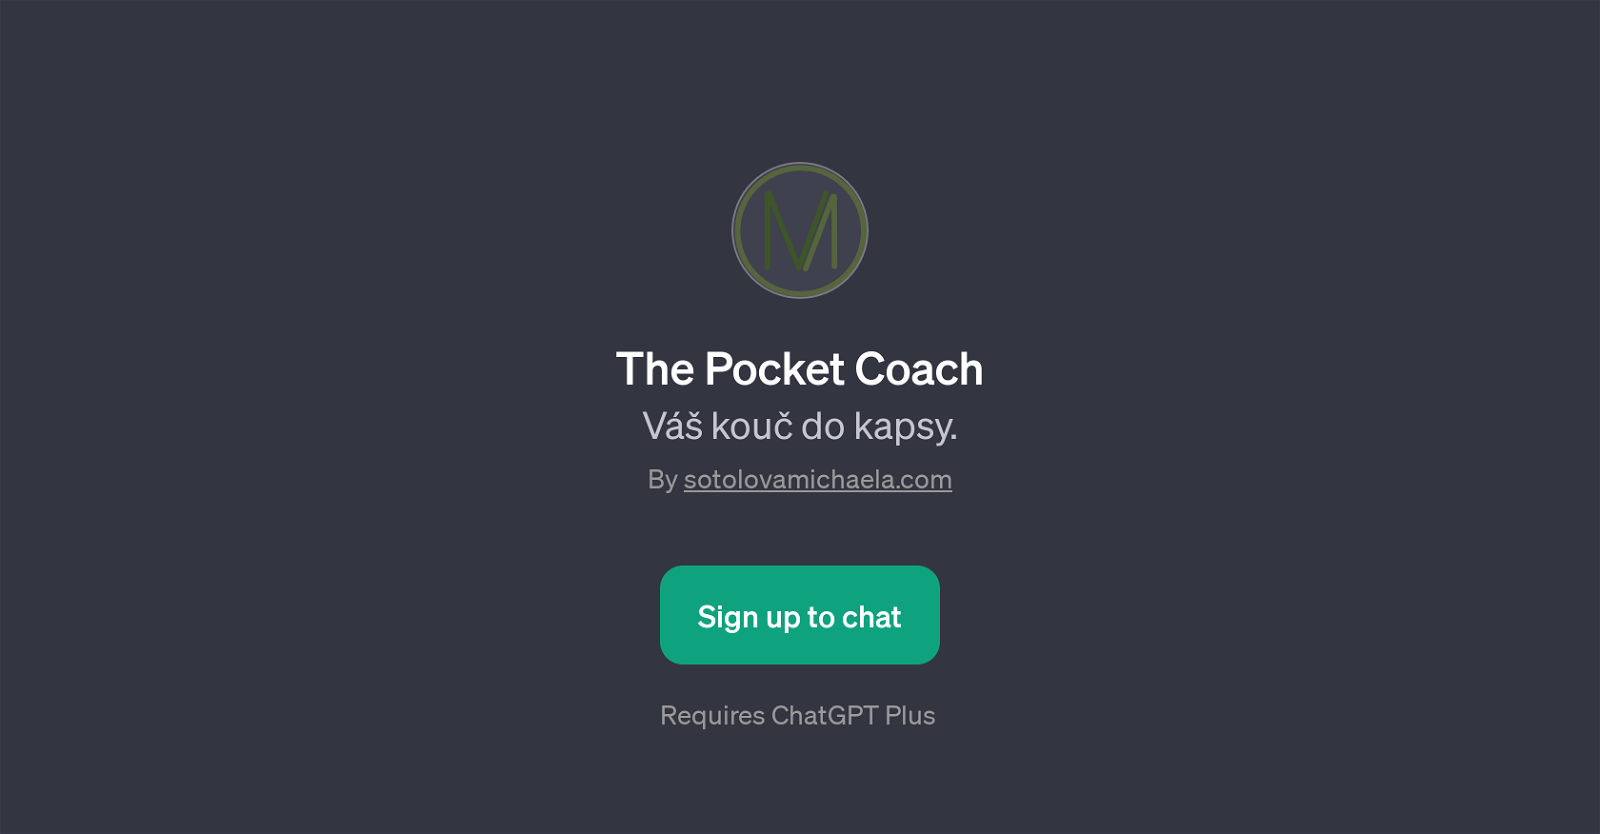 The Pocket Coach website